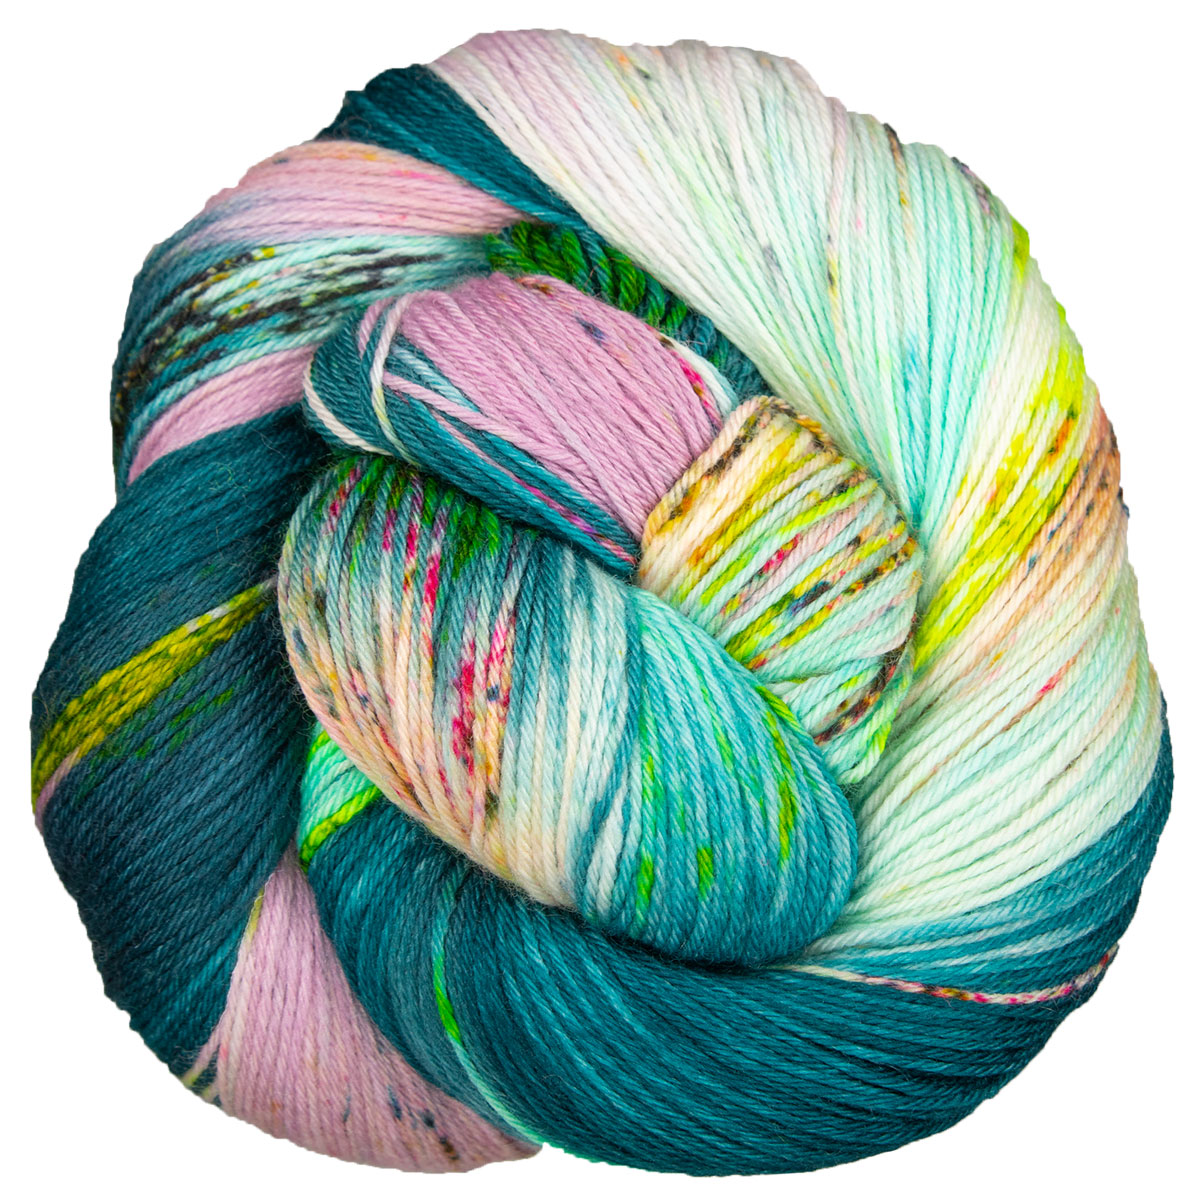 Hedgehog fibres  Sock yarn 3綛セット 生地/糸 素材/材料 ハンドメイド 長期納期